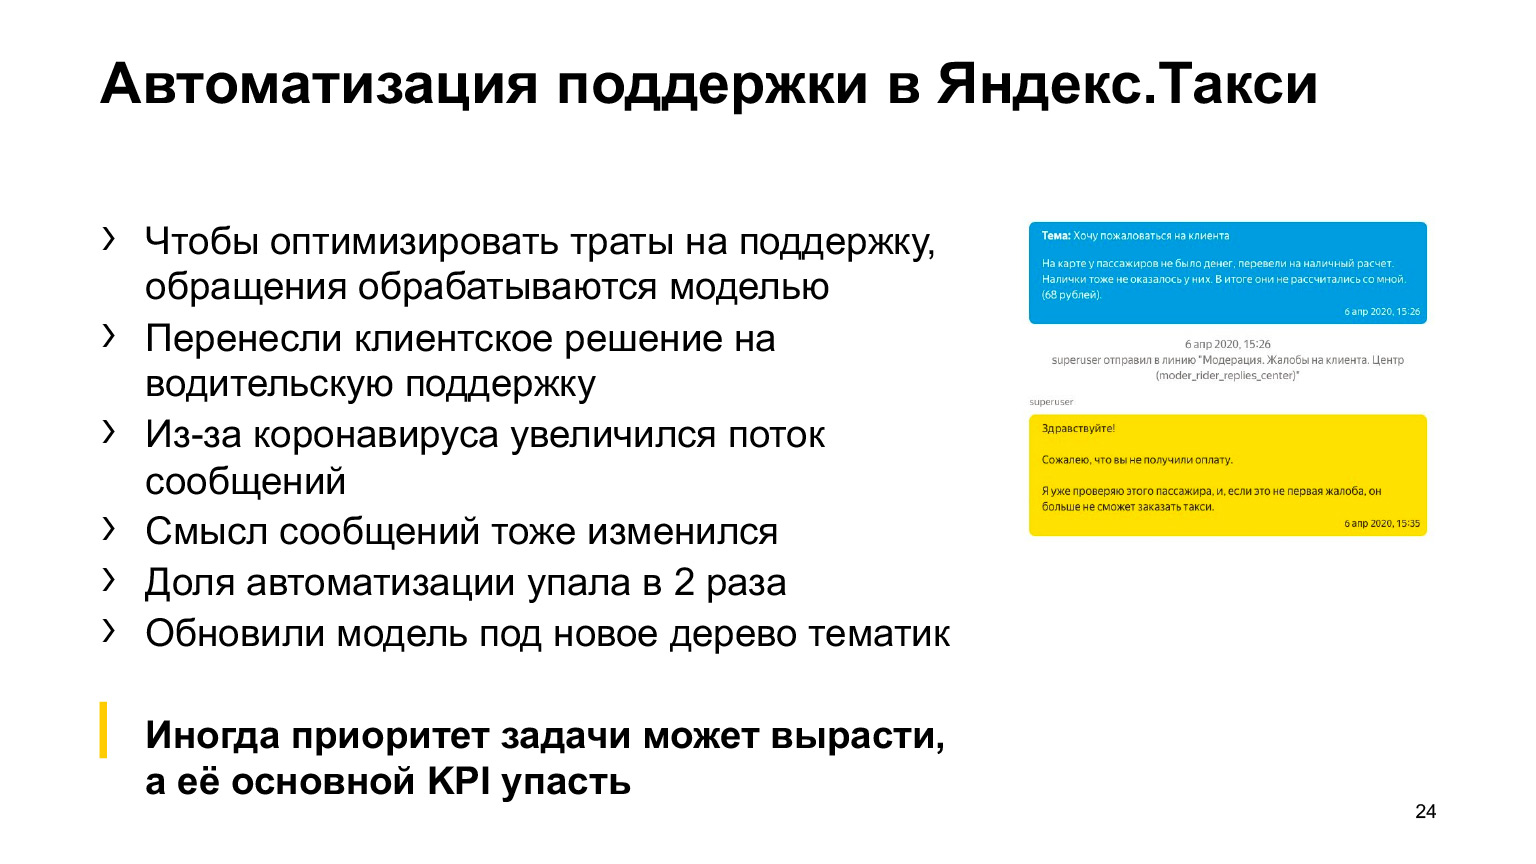 Как коронавирус повлиял на ML-проекты Такси, Еды и Лавки. Доклад Яндекса - 9